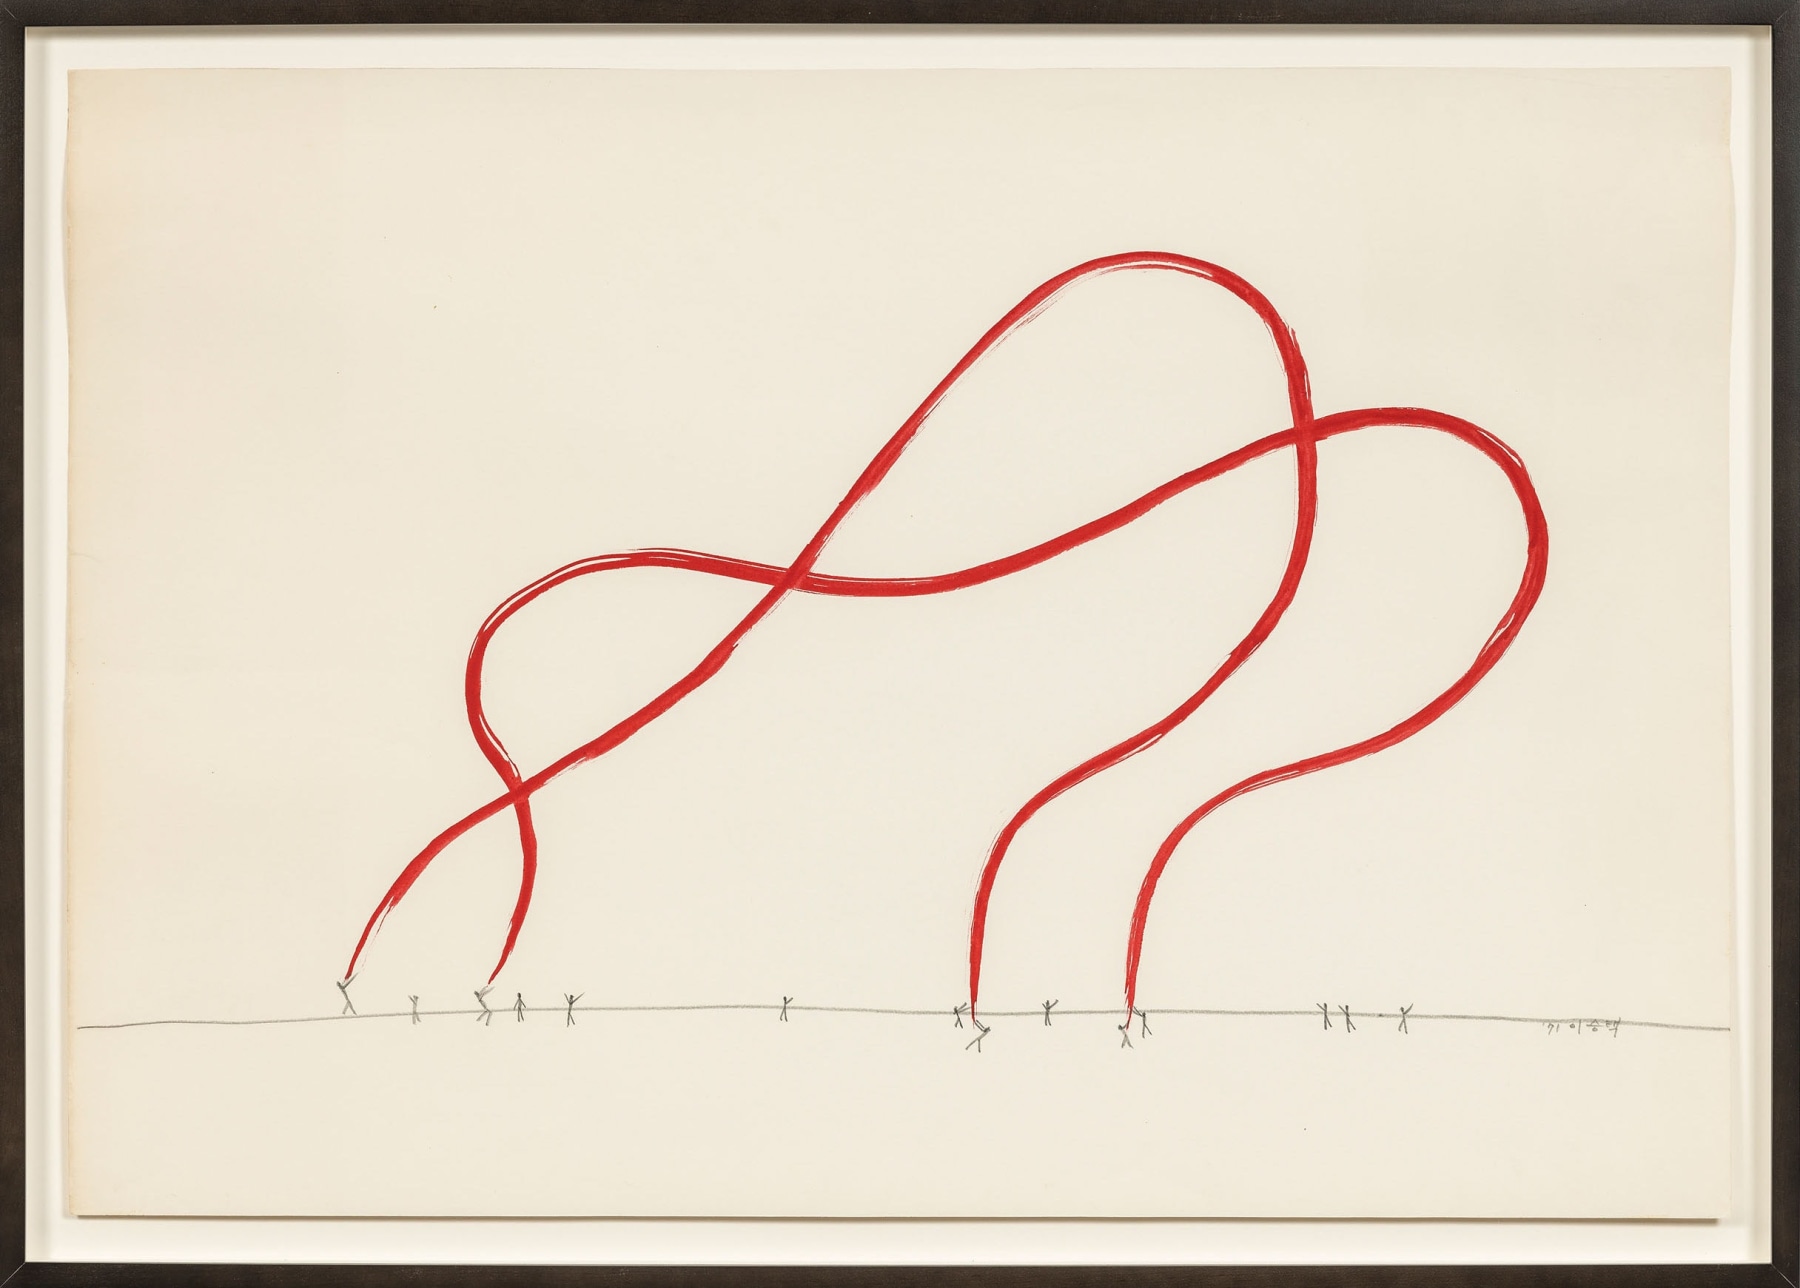 Seung-taek Lee

&amp;ldquo;Drawing&amp;rdquo;, 1971

Pencil, gouache on paper

21 1/2 x 31 inches

54.5 x 78.5 cm

LEE 36

$27,000
&amp;nbsp;